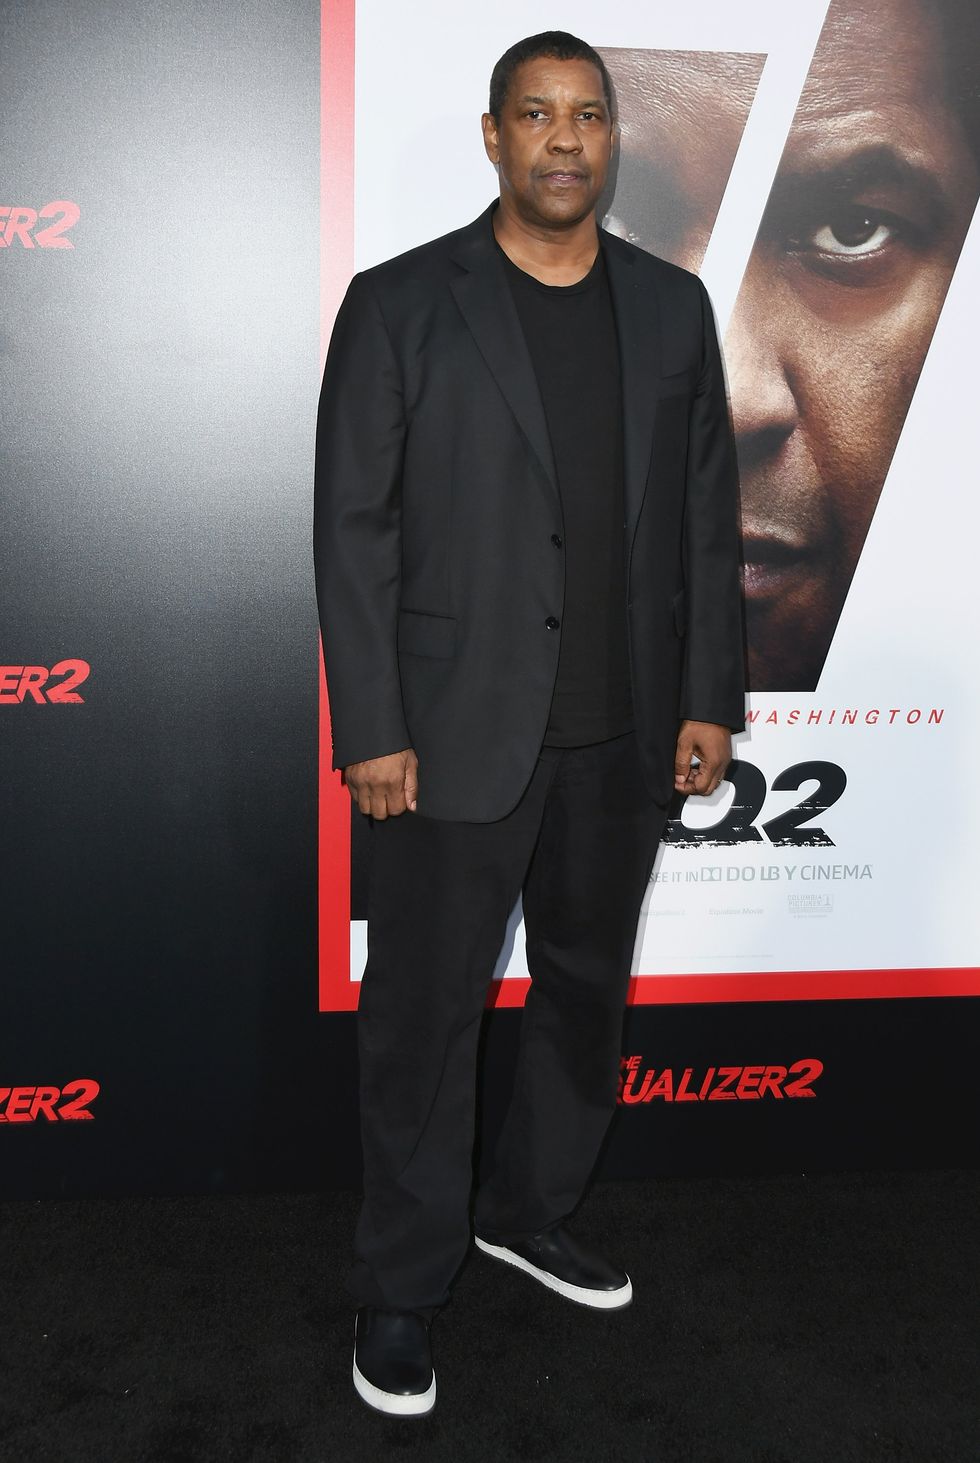 Estreno de 'Equalizer 2', llegada de Denzel Washington